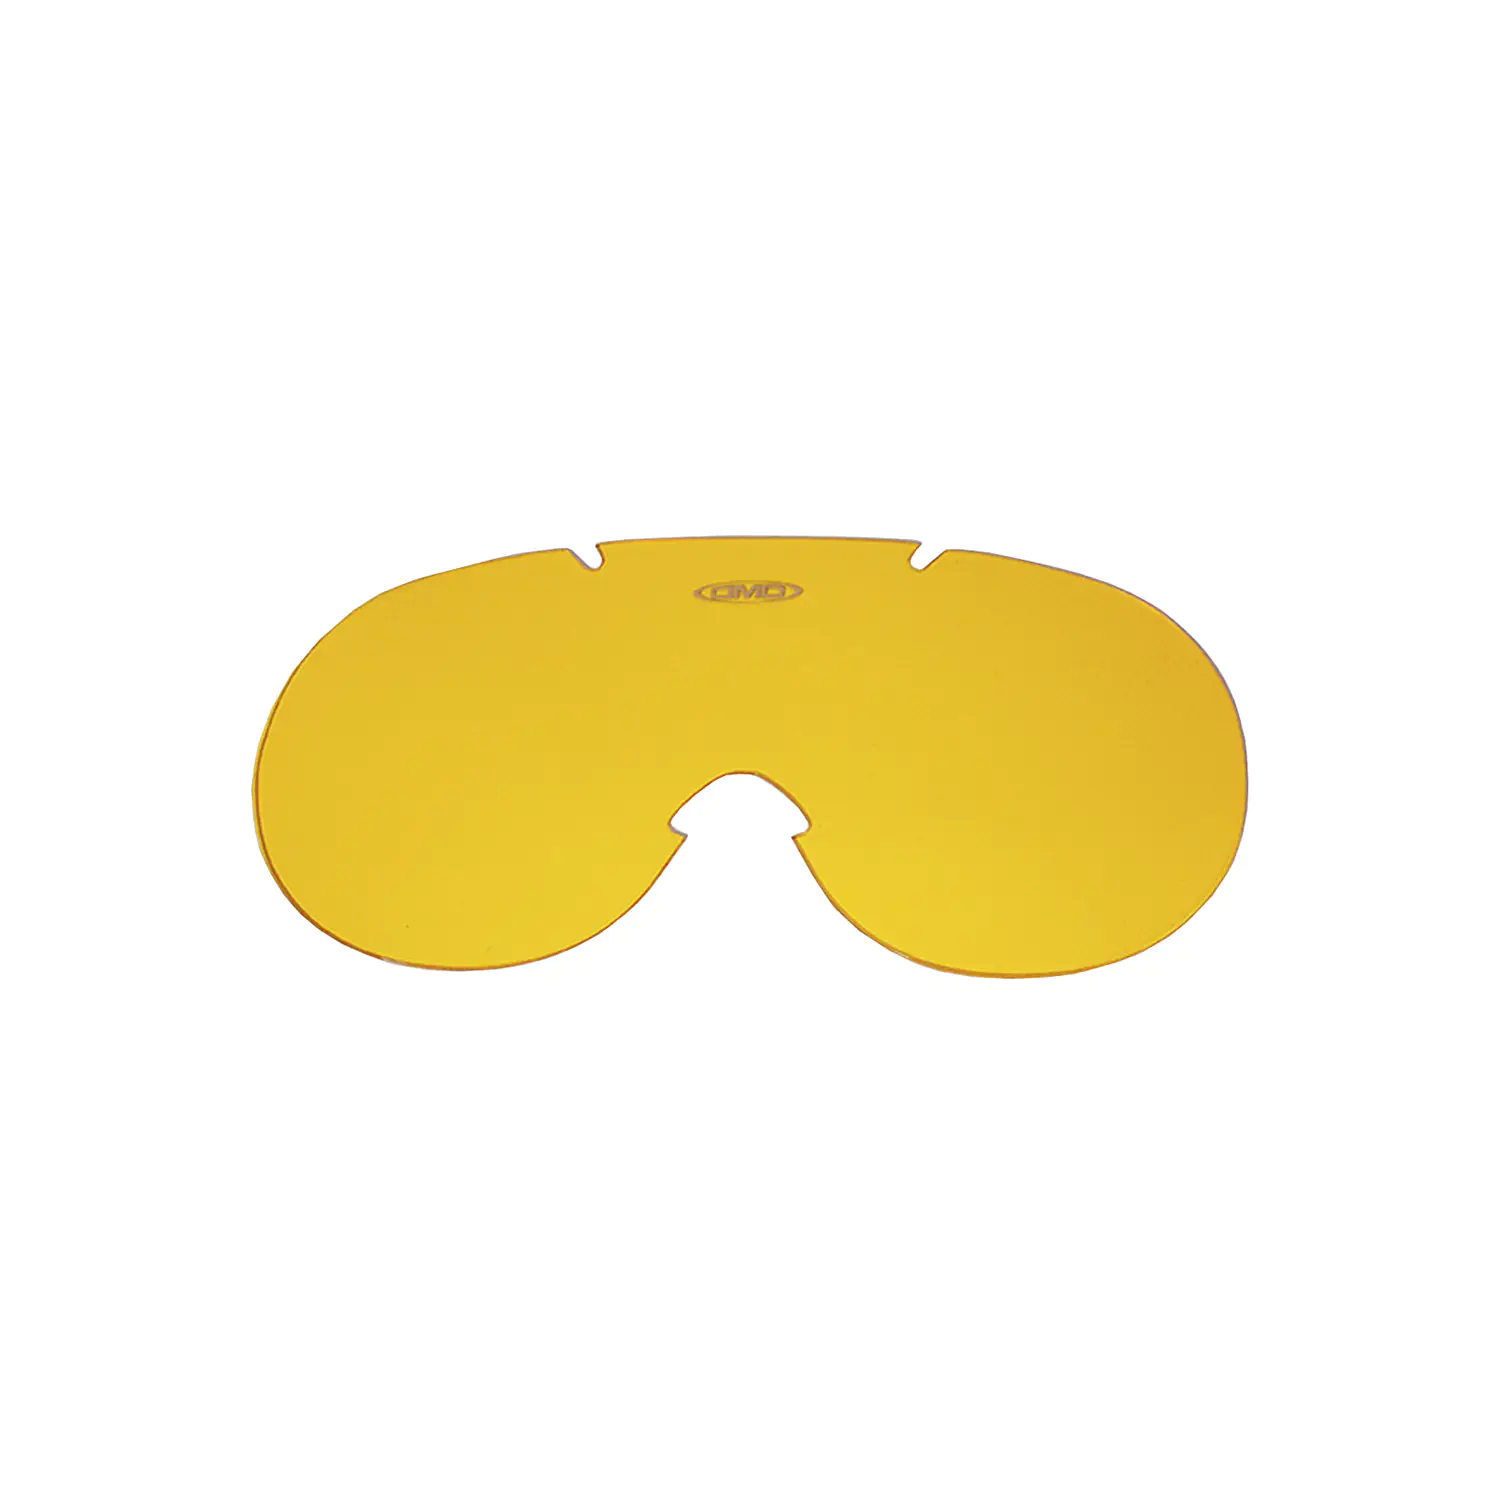 dmd.eu - LENTE RICAMBIO GHOST DMD – accessory ghost yellow lens